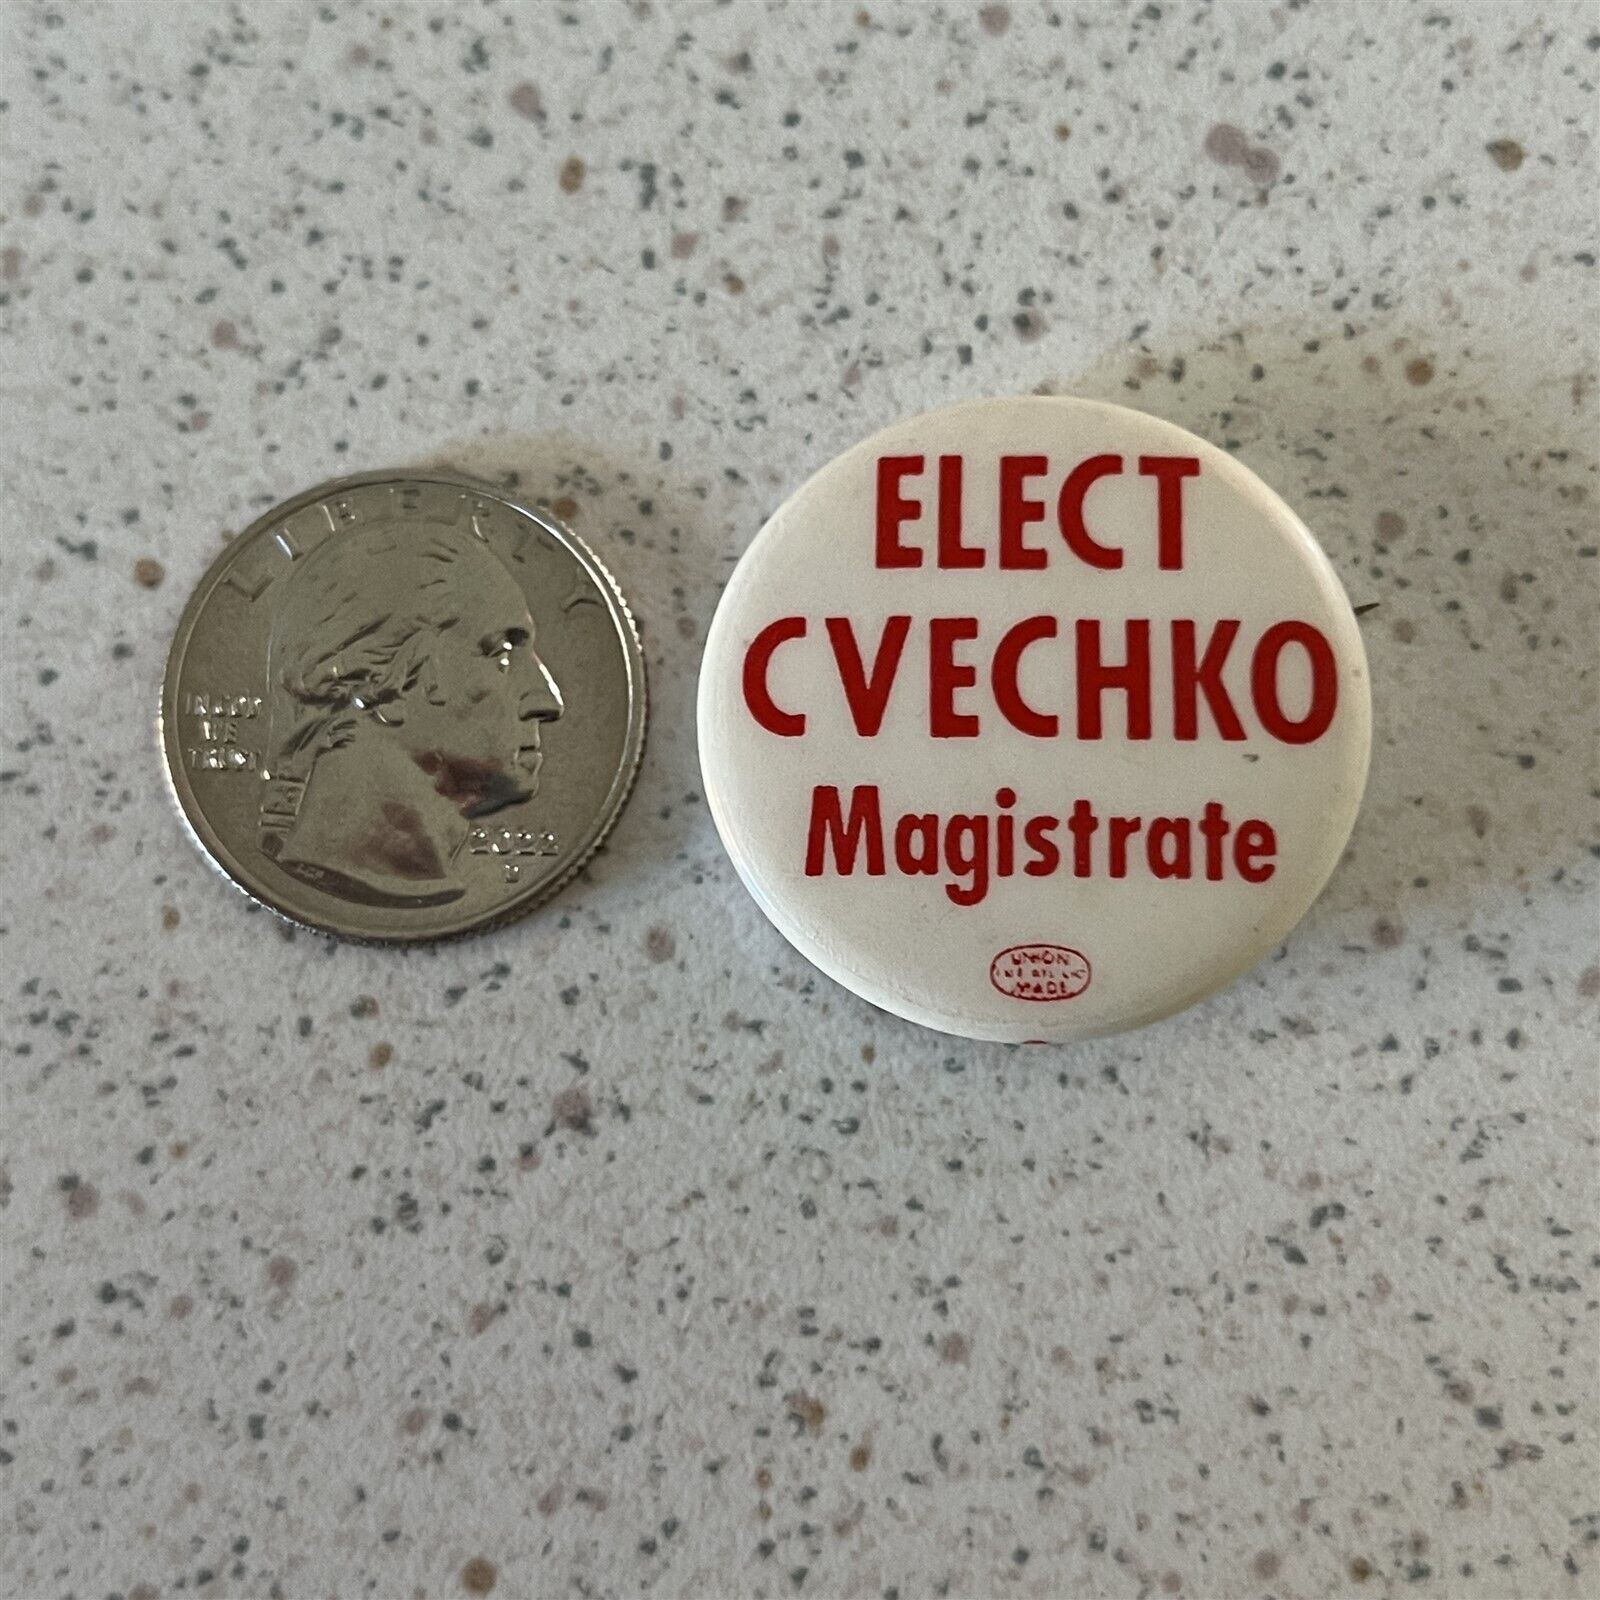 Elect Cvechko Magistrate Vintage Election Pinback Button #45226